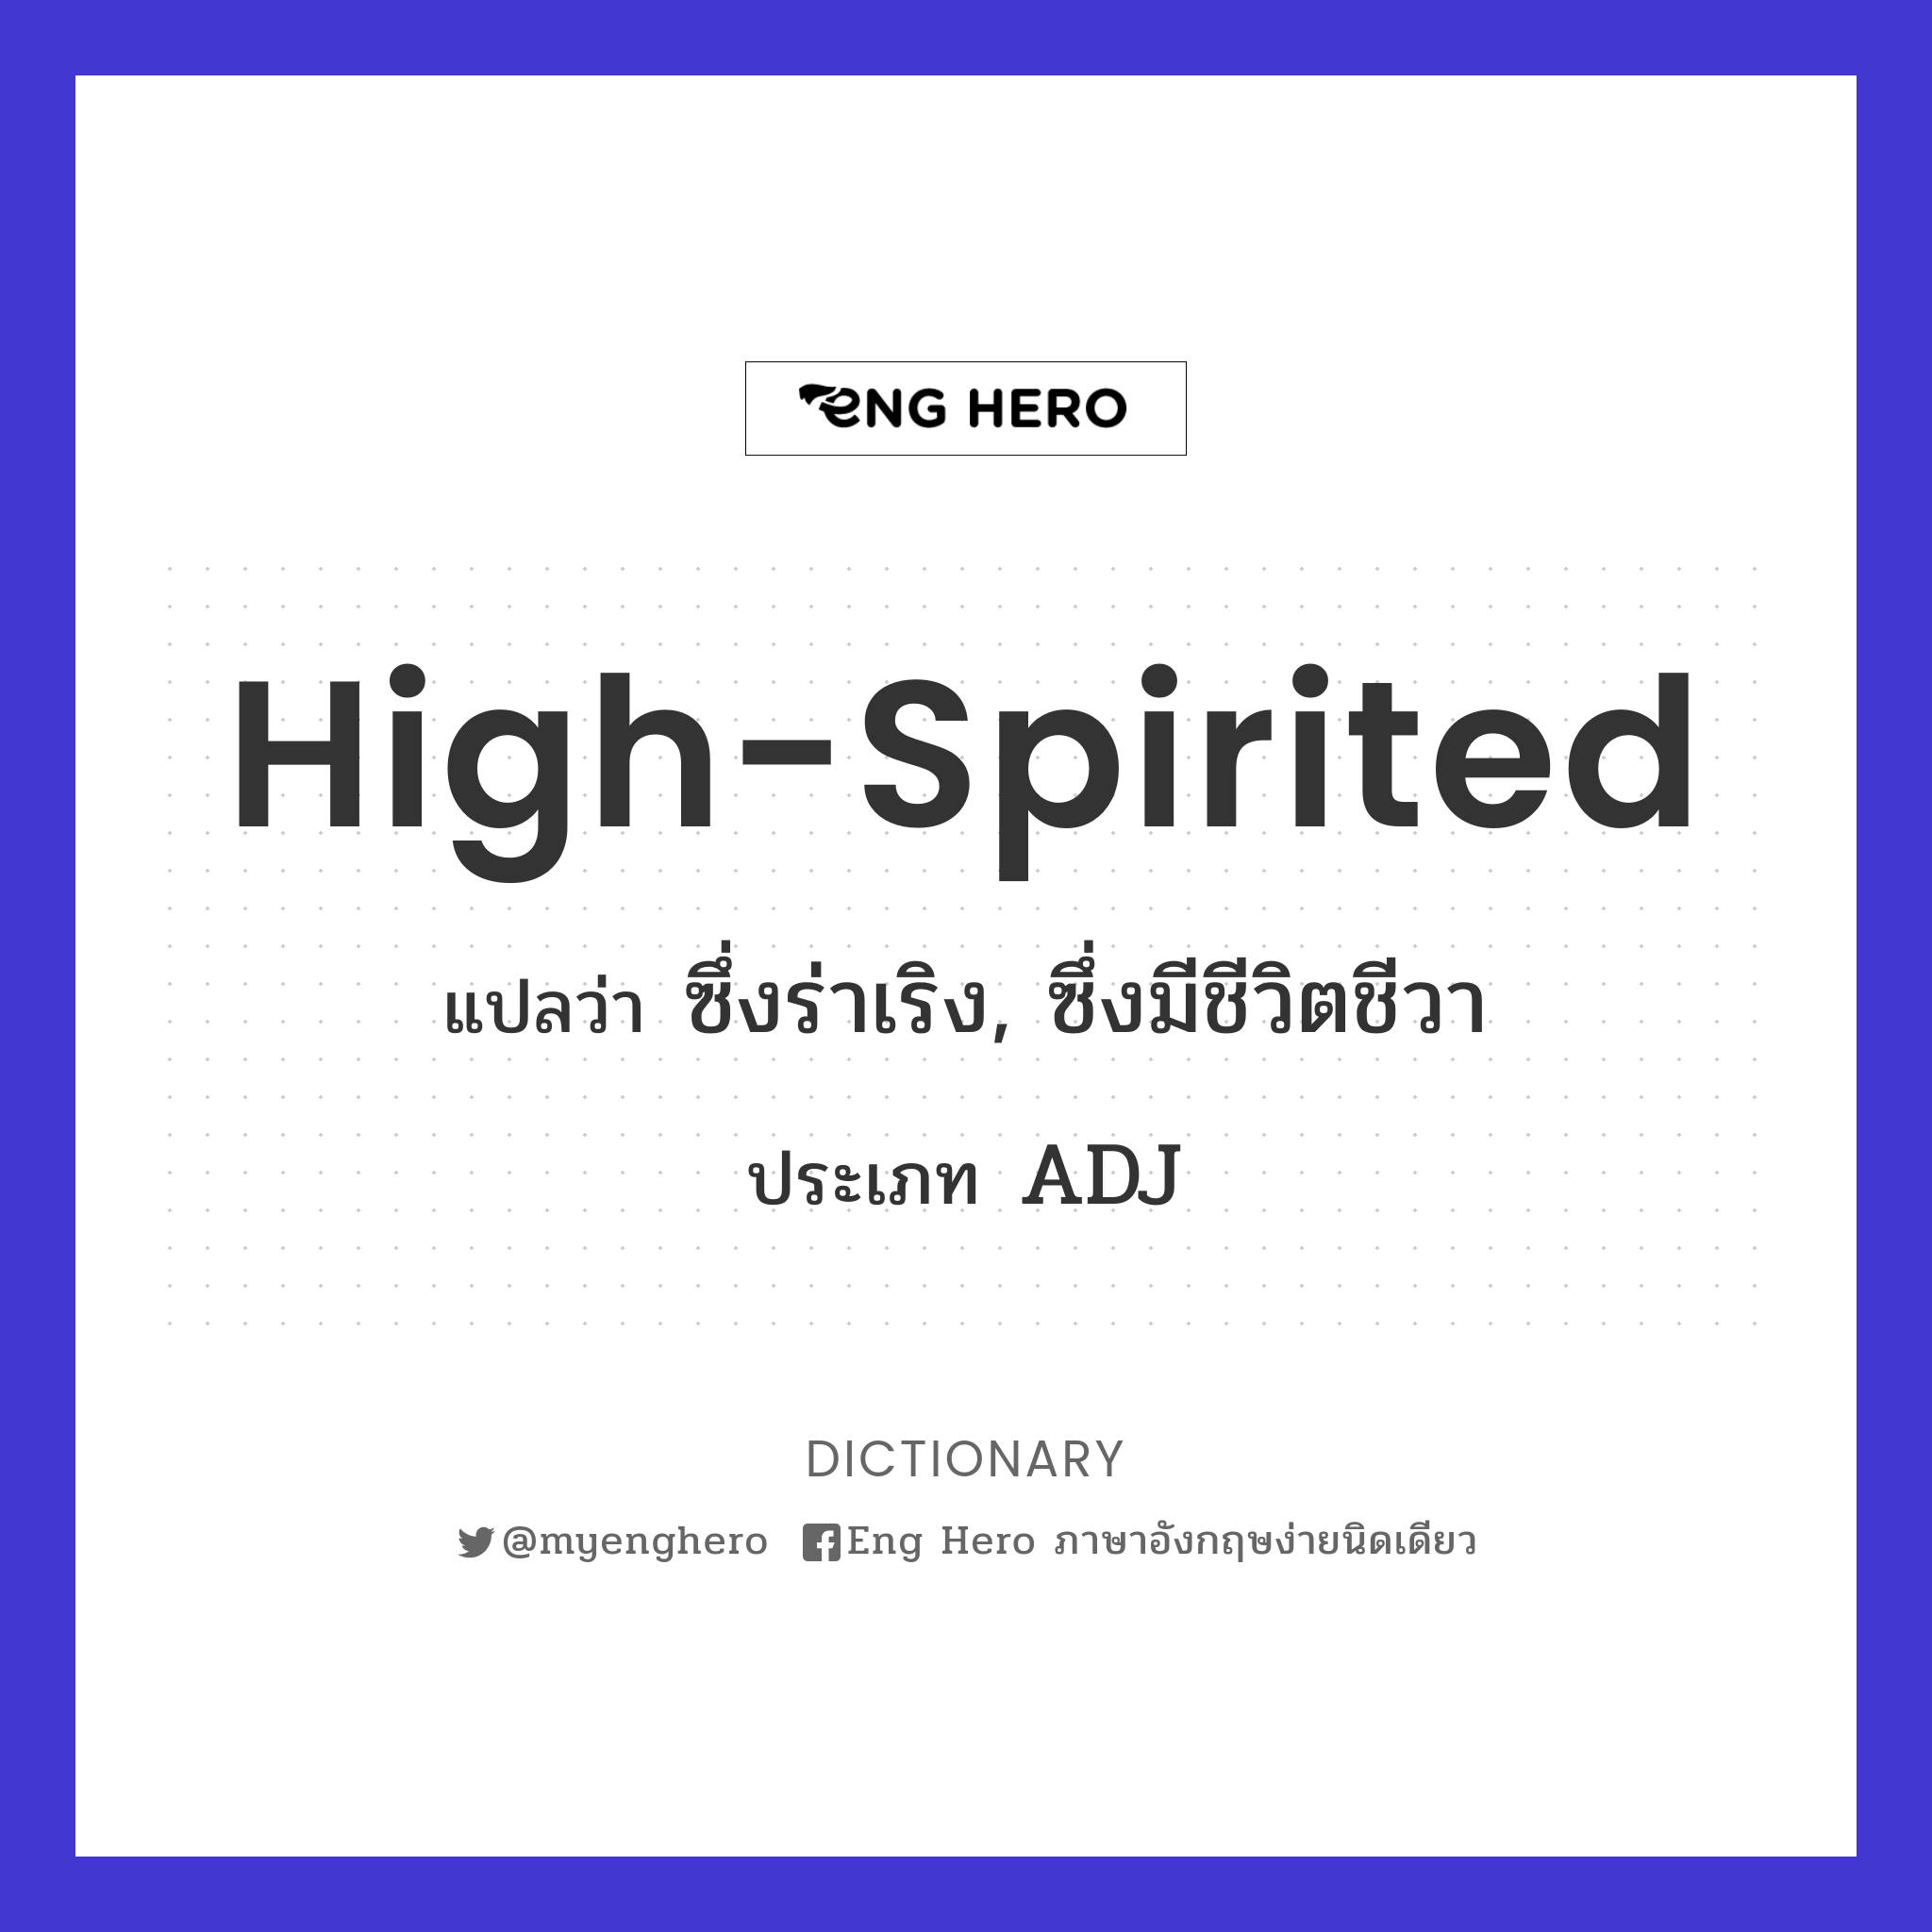 high-spirited